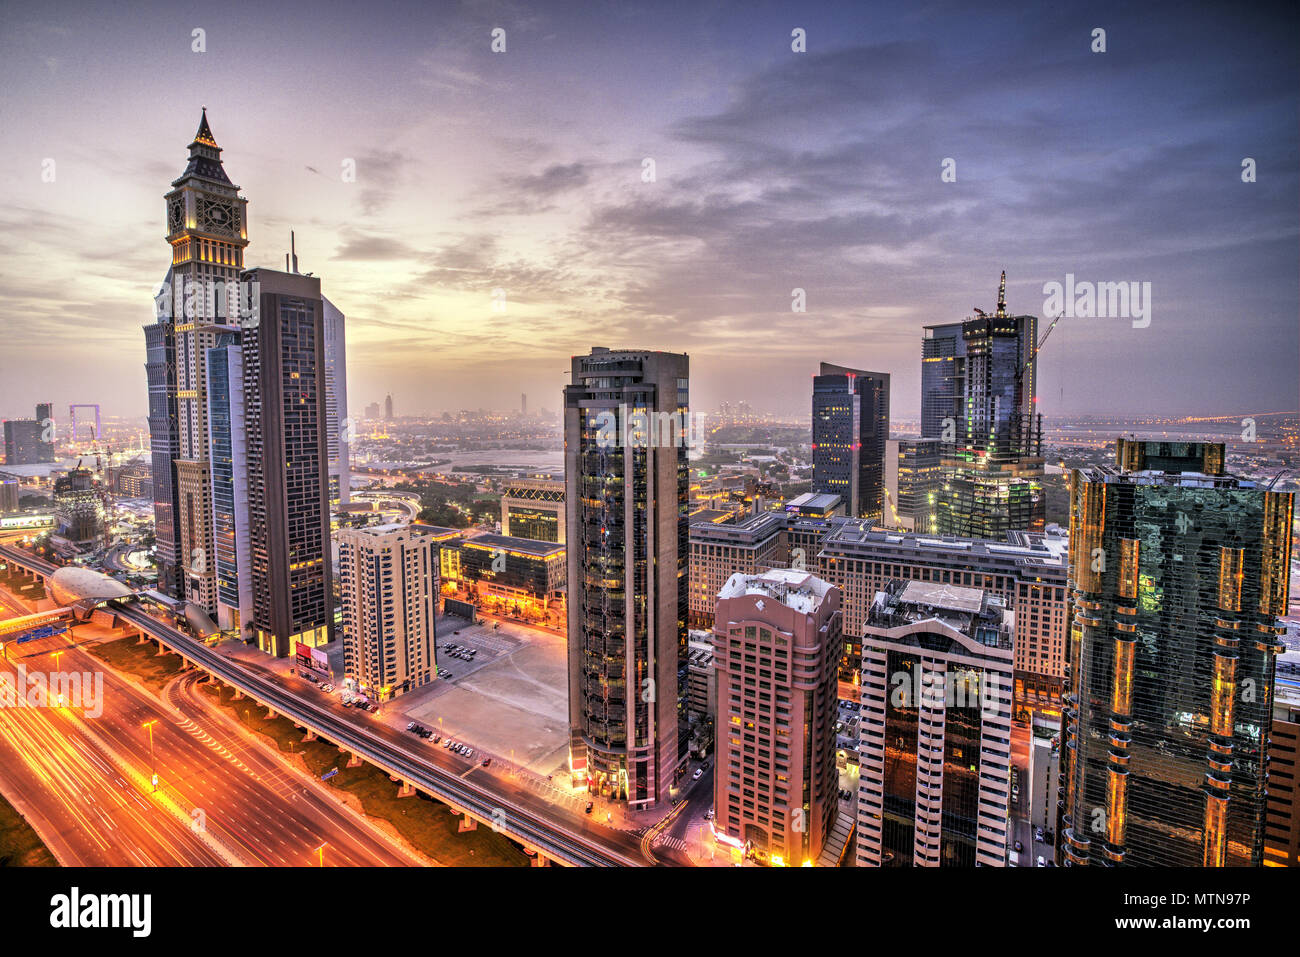 Dubai sunset panoramic view of Sheikh Zayed road. Dubai is super modern city of UAE, cosmopolitan megalopolis. Stock Photo